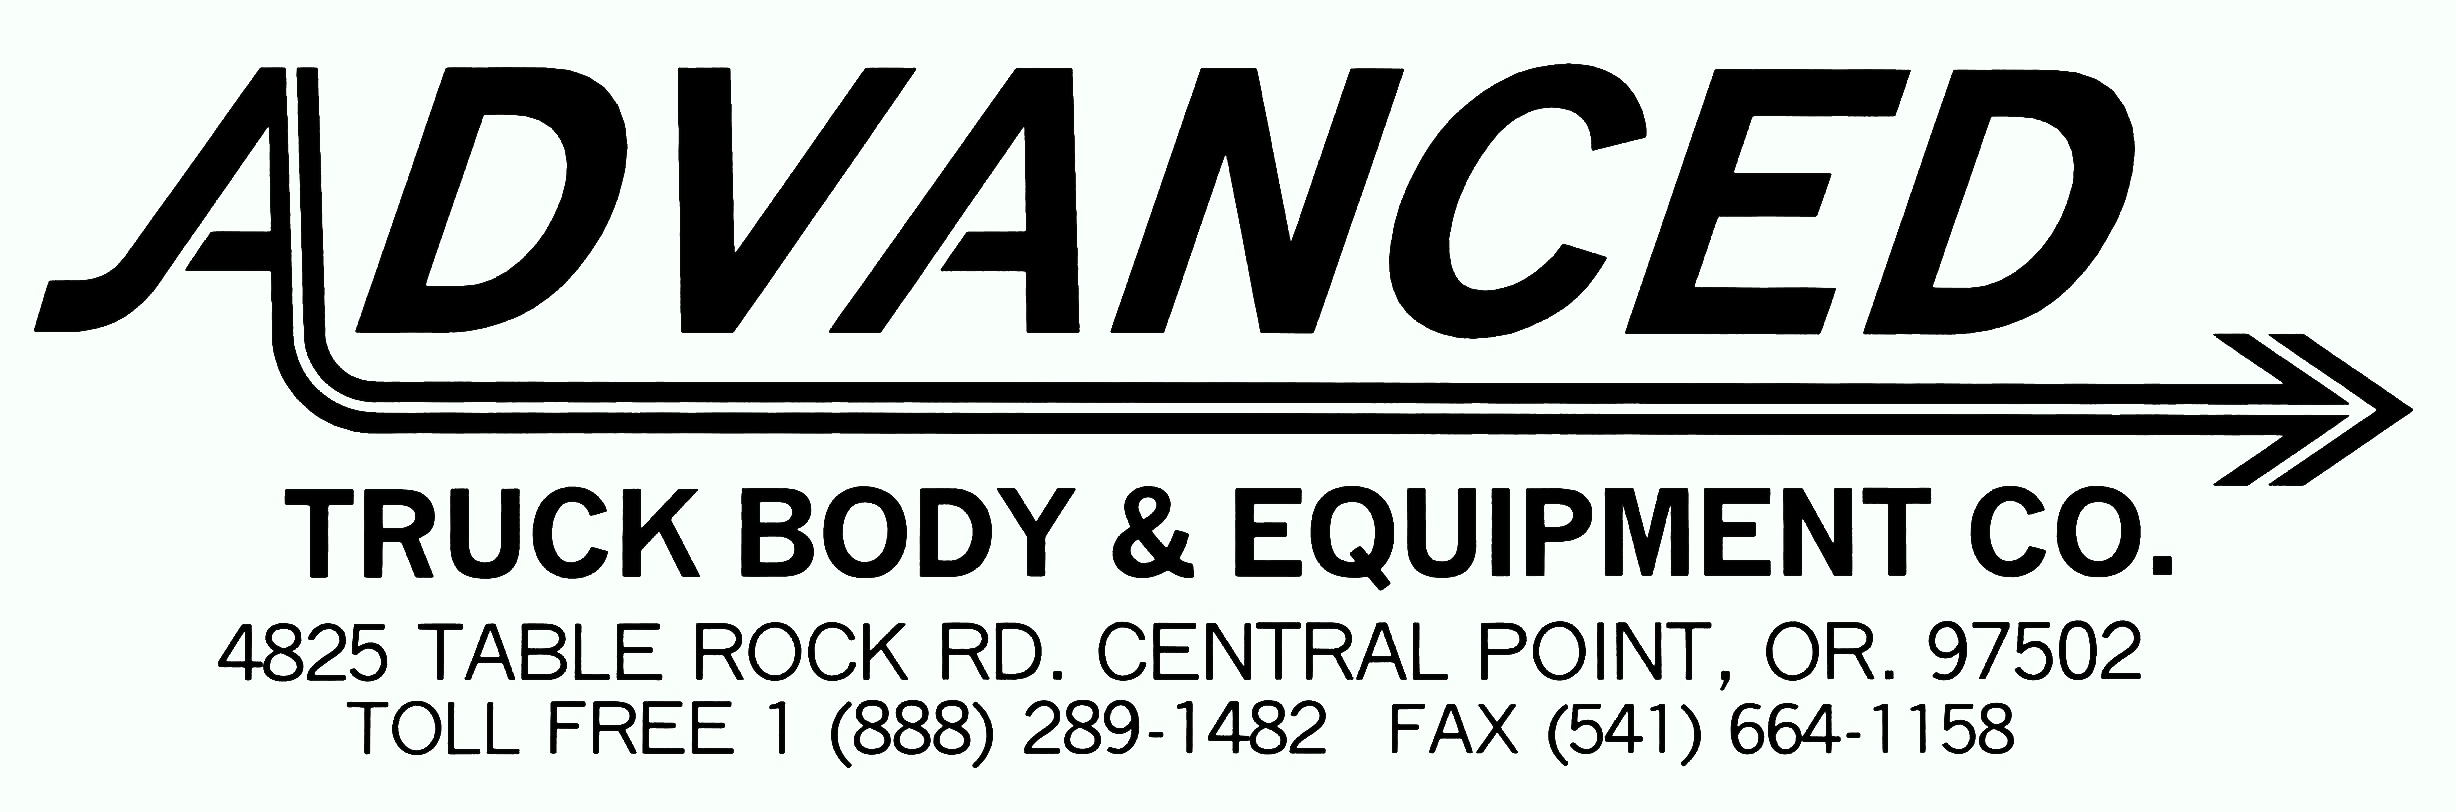 Advanced Truck Body & Equipment Co.